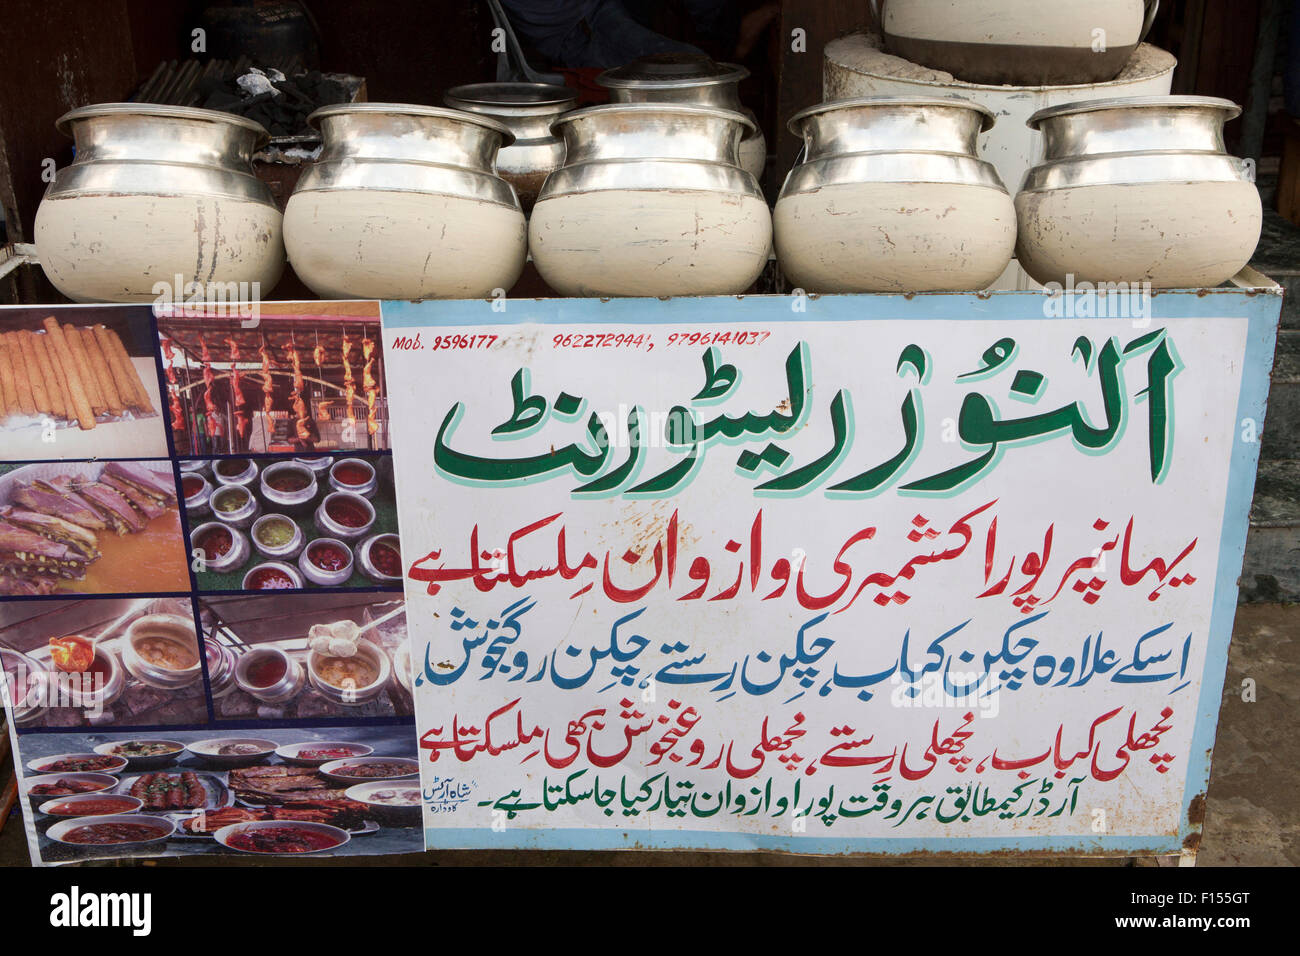 India, Jammu & Kashmir, Srinagar, old city, food stall sign in Kashmiri script Stock Photo